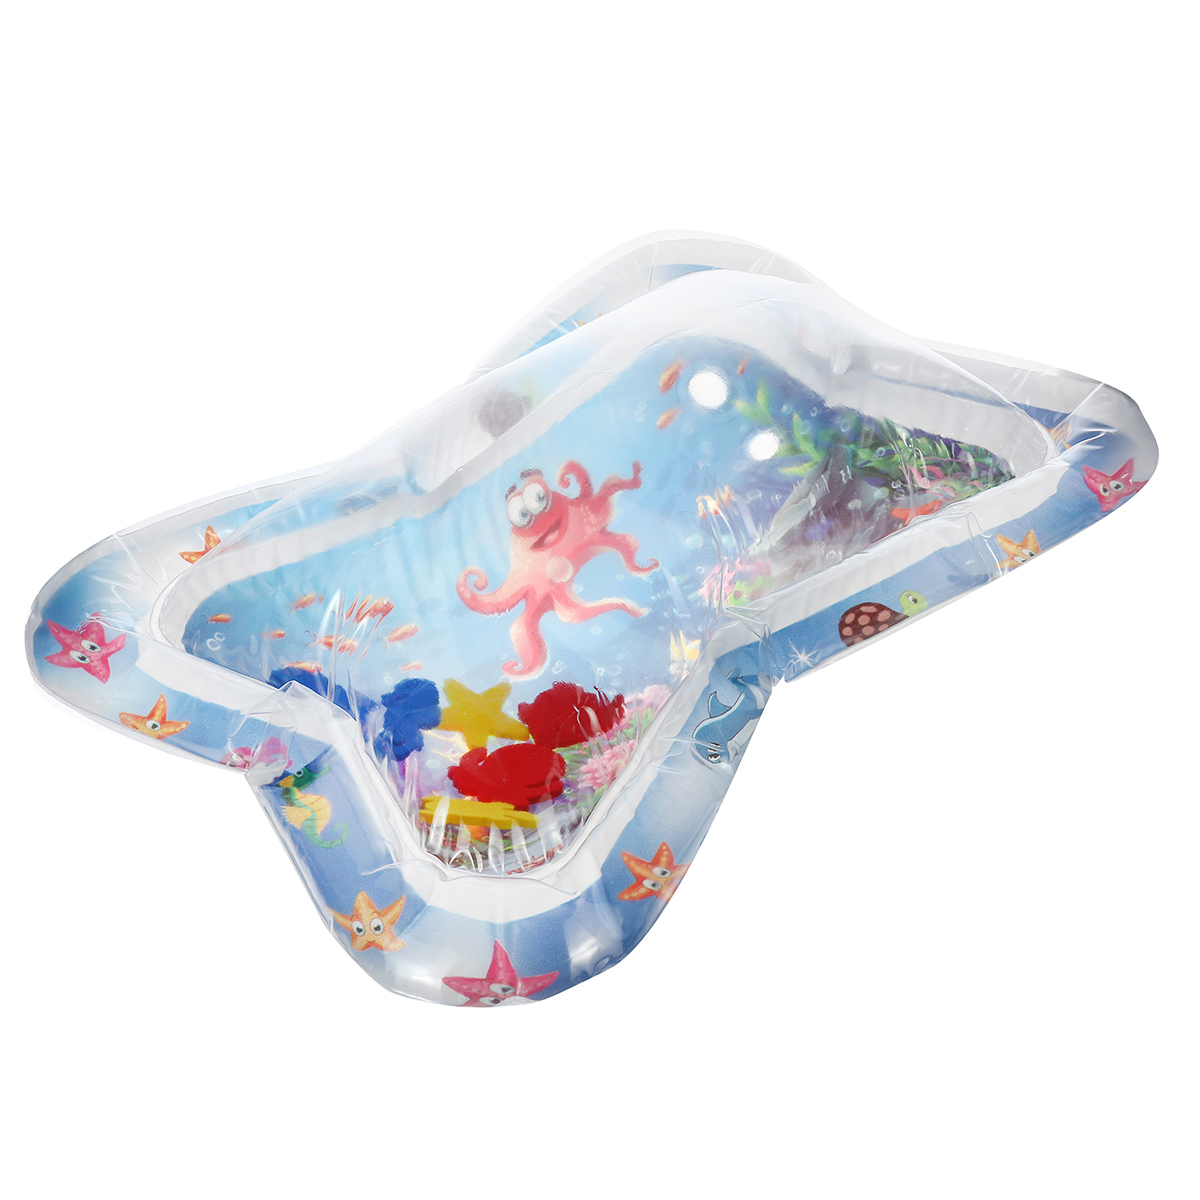 PVC-Inflatable-Baby-Water-Cushion-Air-Mattress-Summer-Cool-Kids-Fun-Ice-Mat-1818380-8